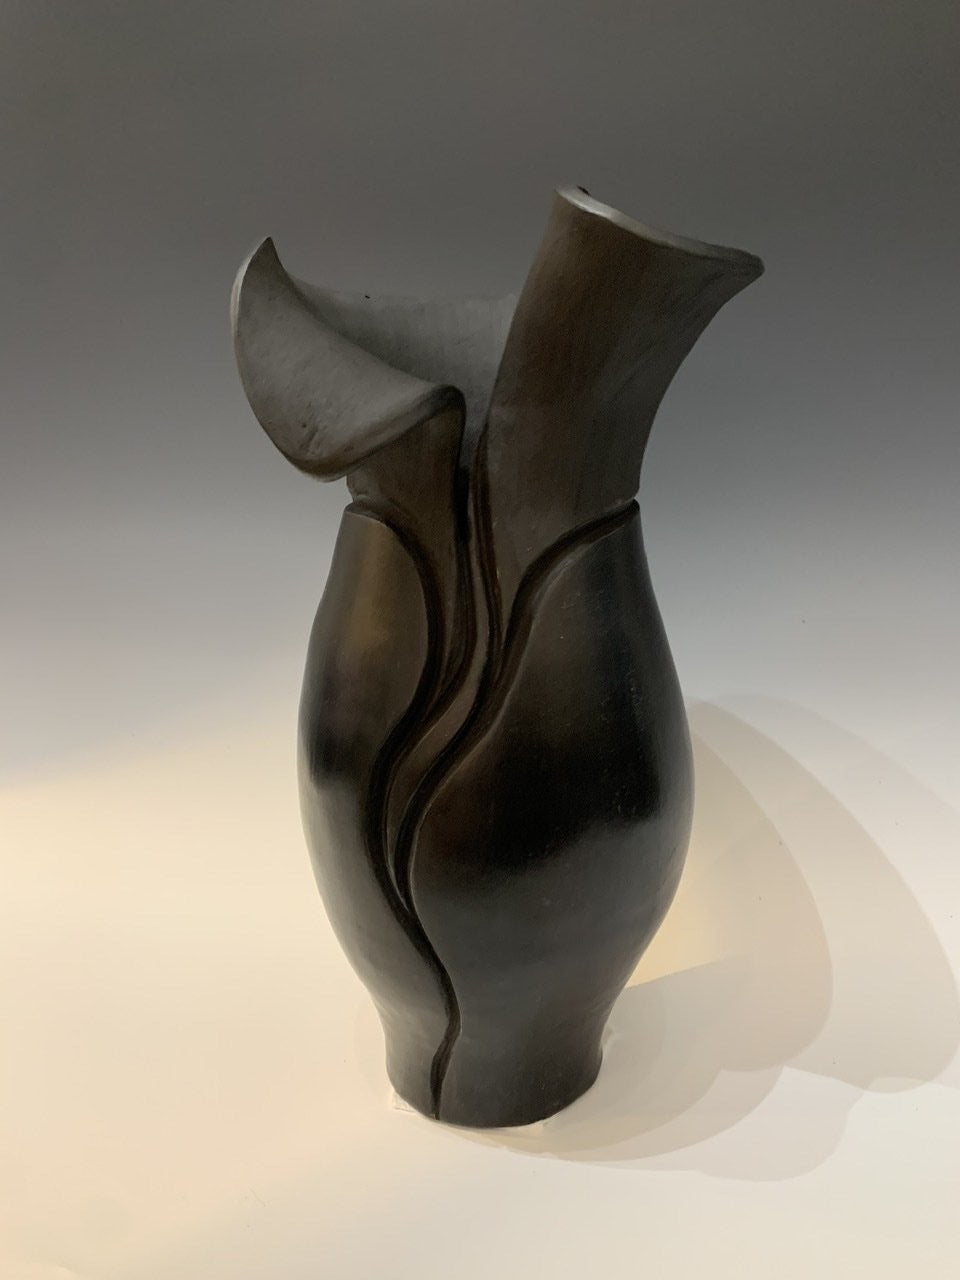 “Night Bloom” Coil Built Earthenware Ceramic Vessel